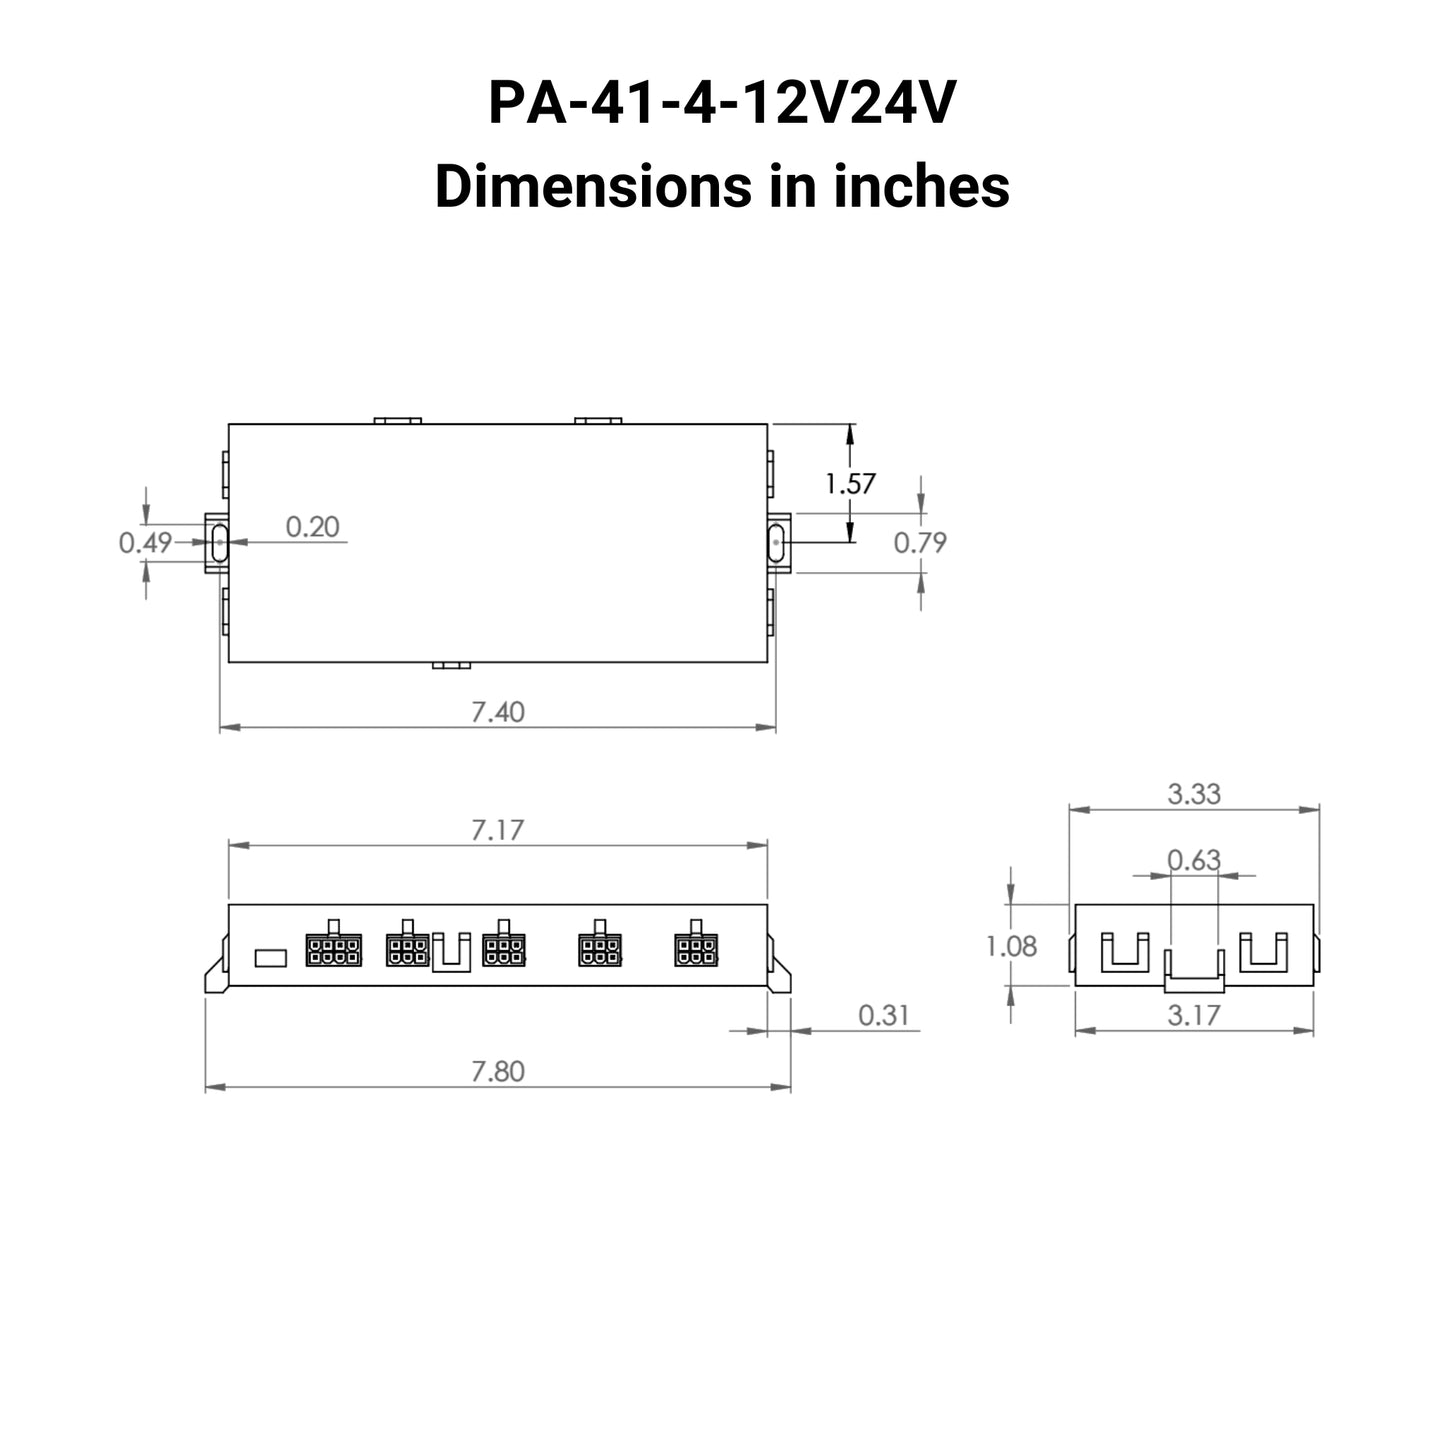 PA-41-4-12V24 control box dimensions in inches